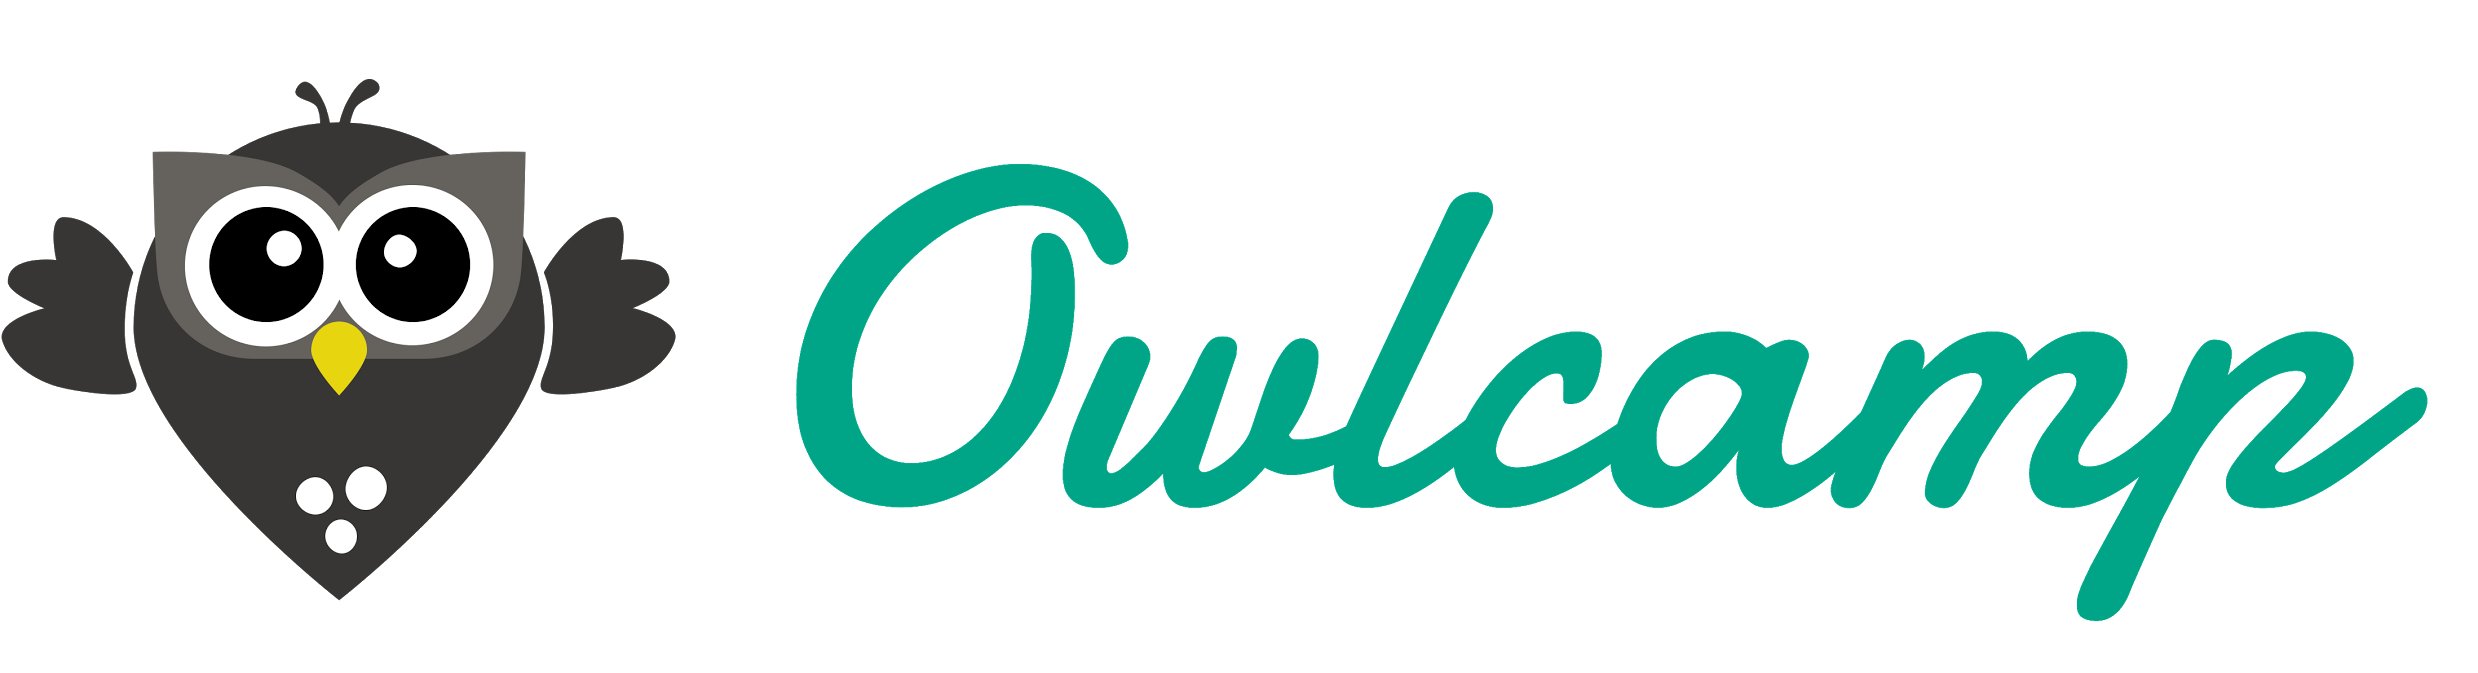 Owlcamp logo